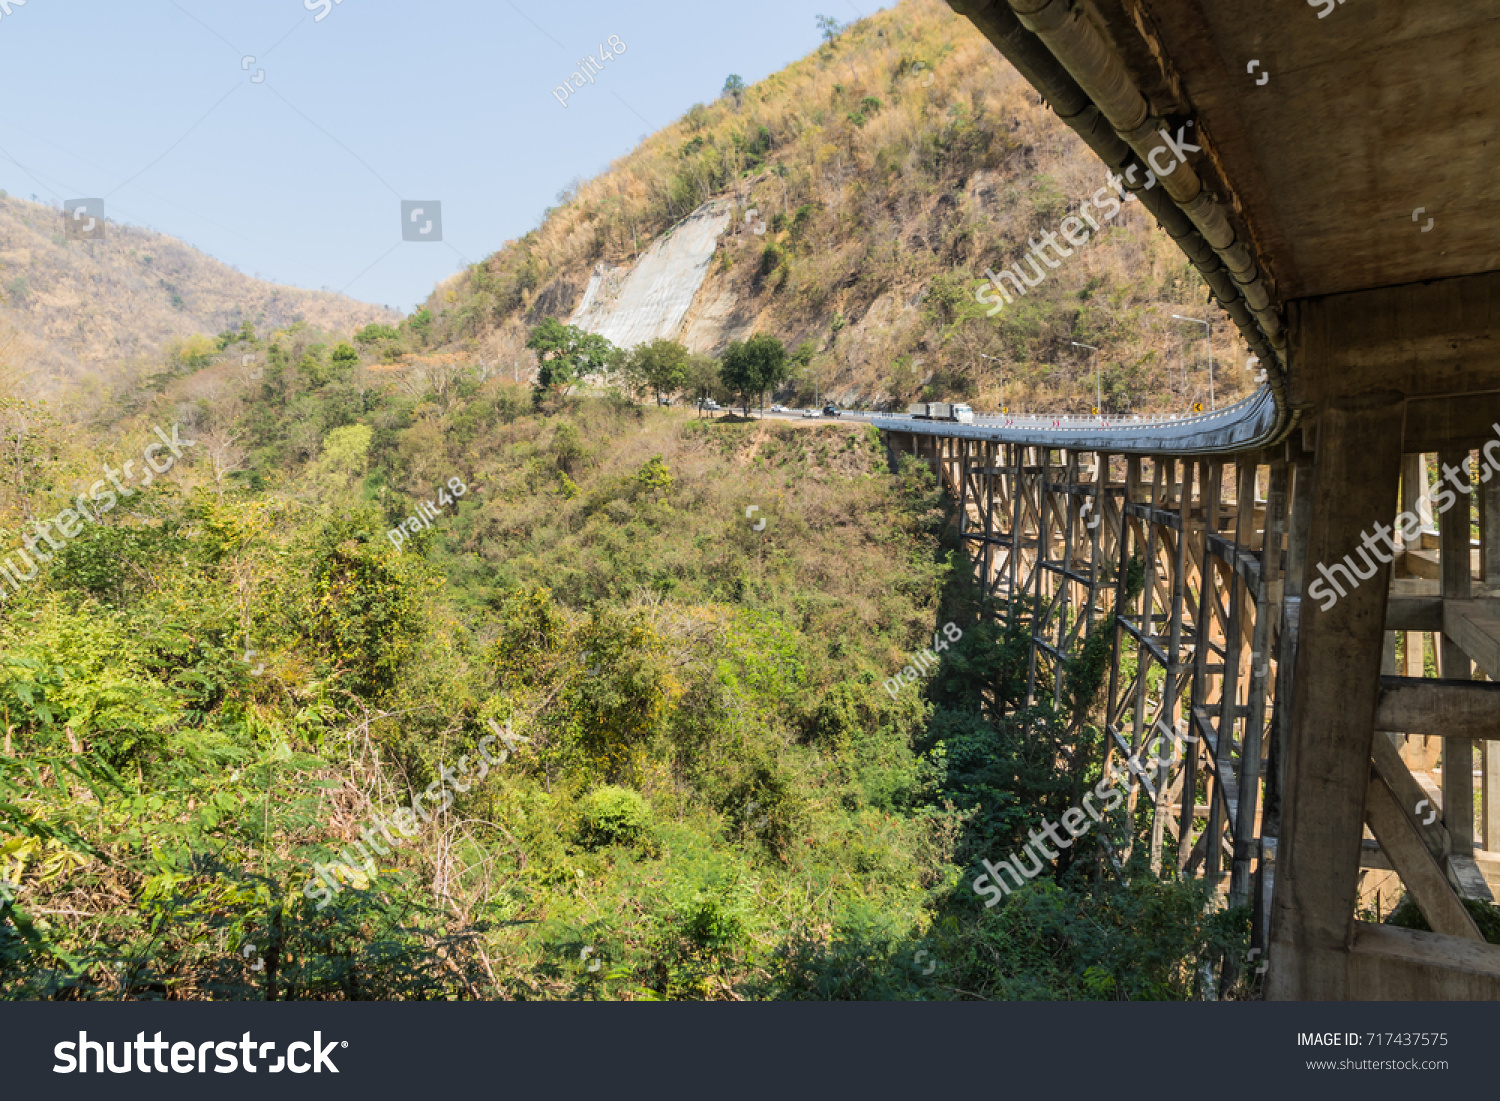 Concrete bridge across the deep gorge in the valley, Thailand #717437575